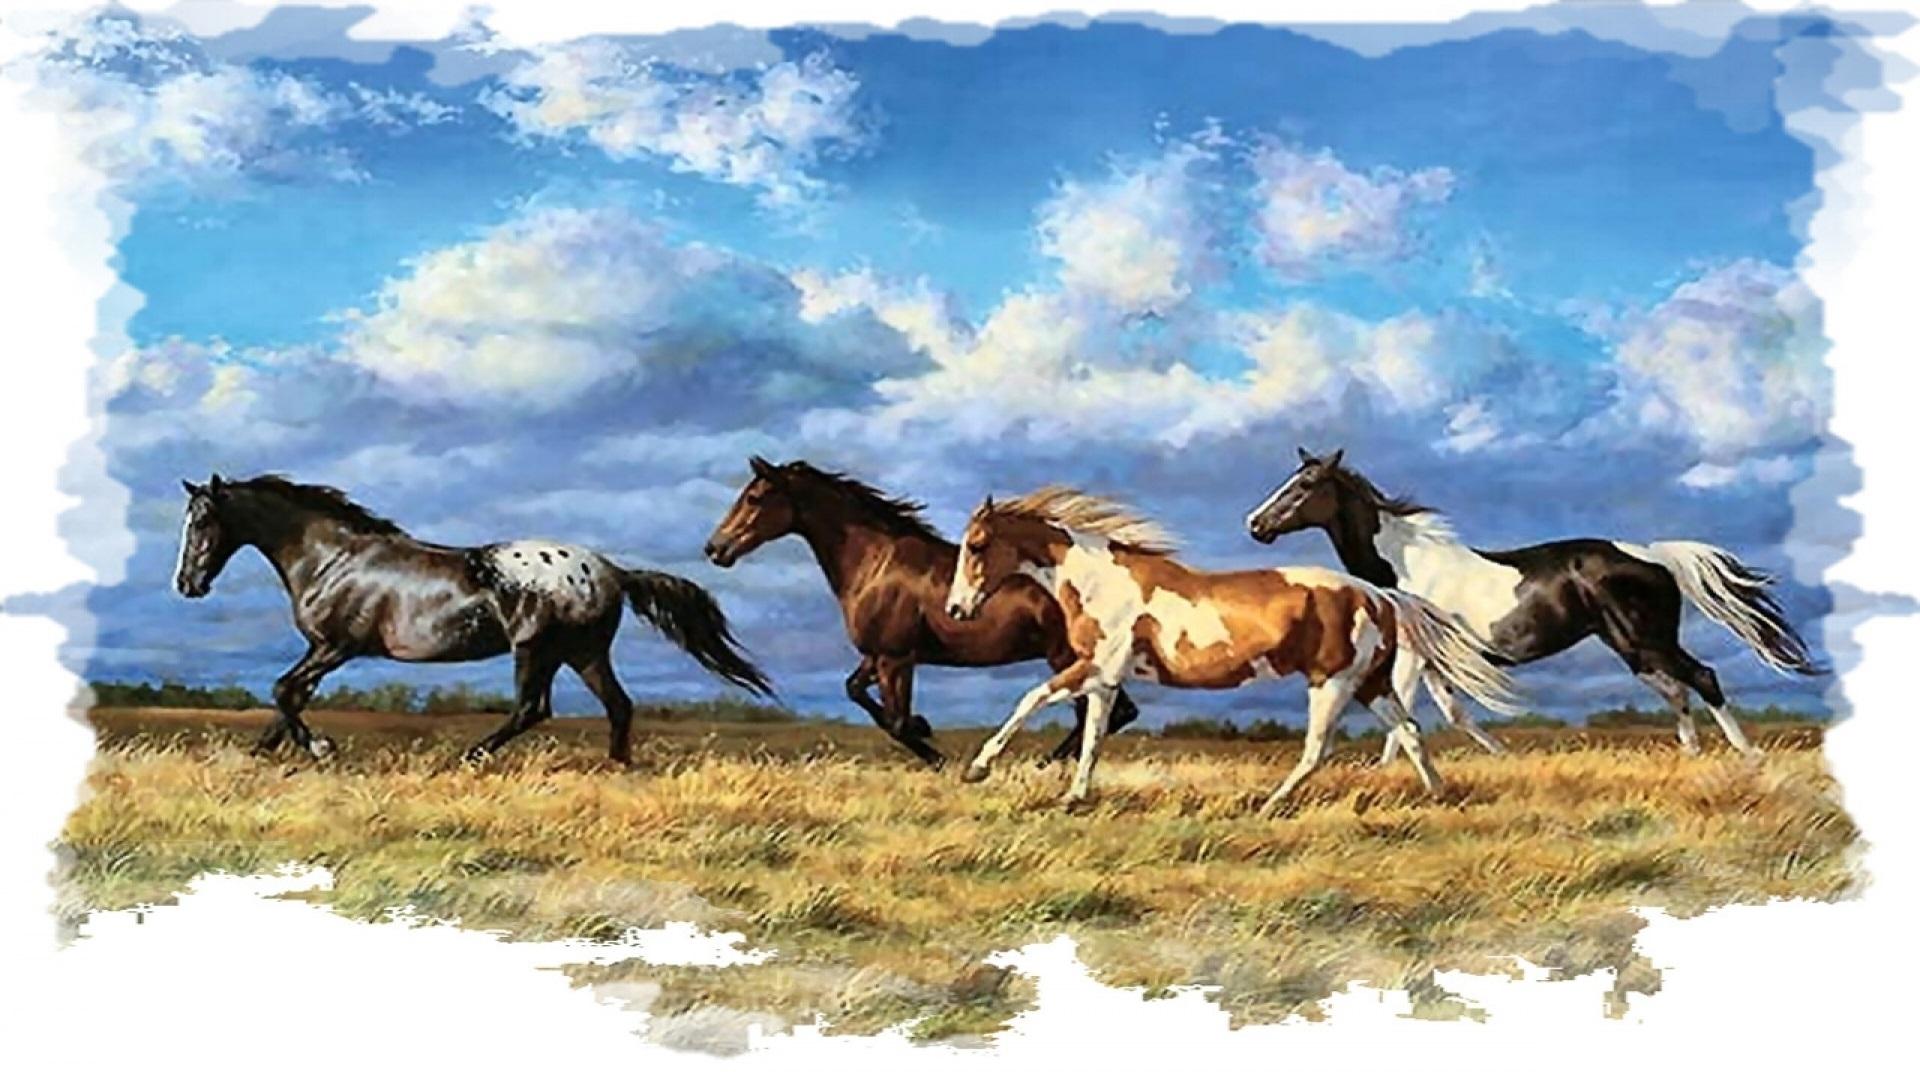 Seven Horse HD Wallpaper 34 Find HD Wallpaper For